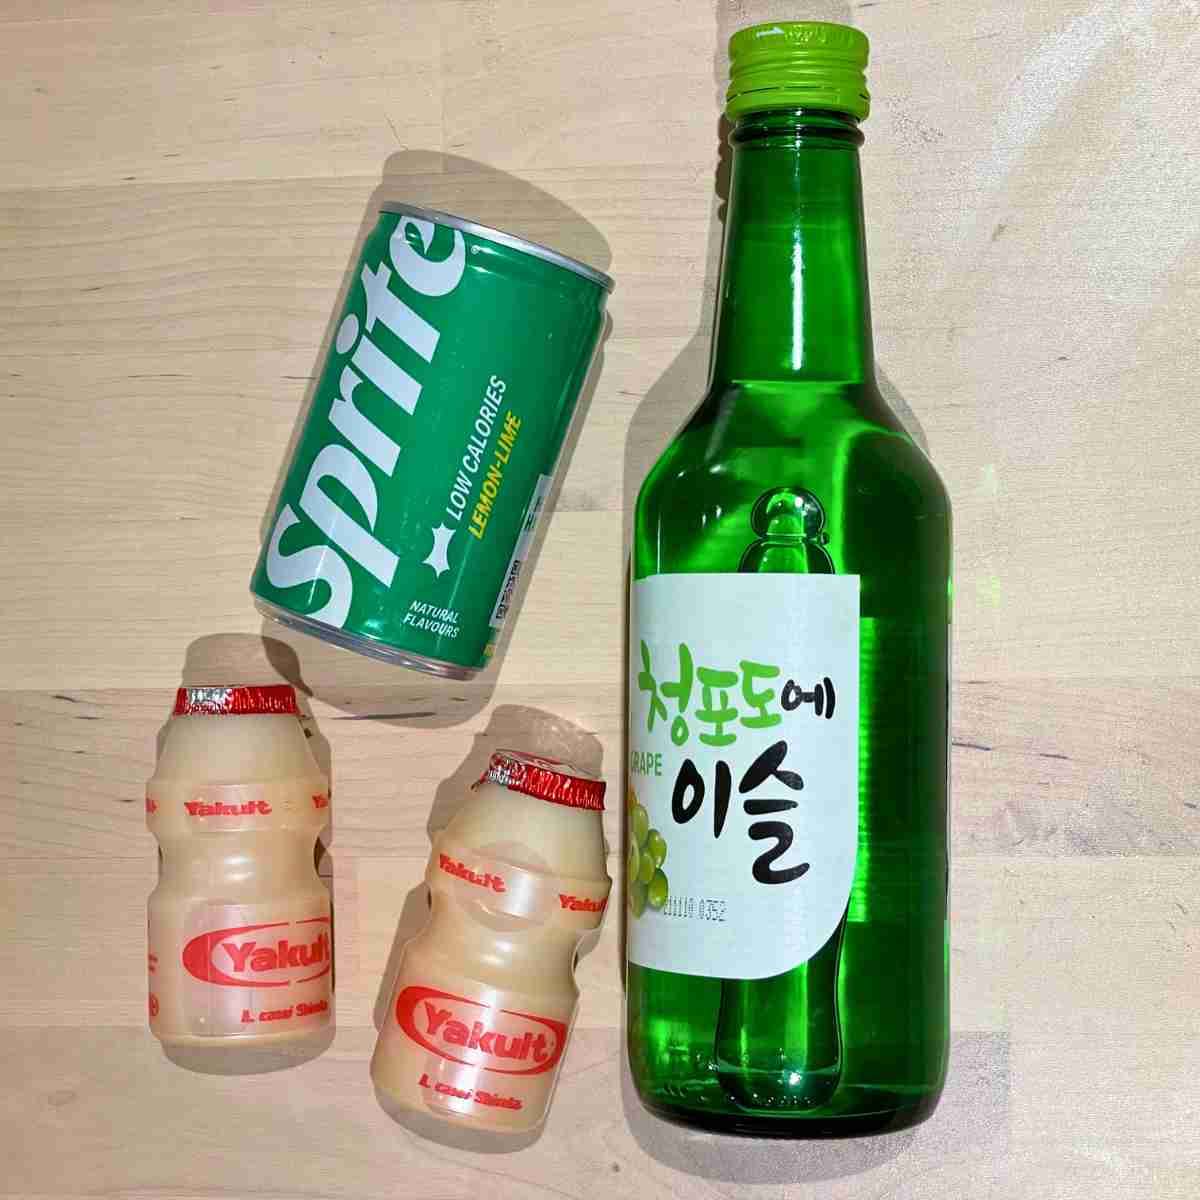 Yogurt soju cocktail ingredients